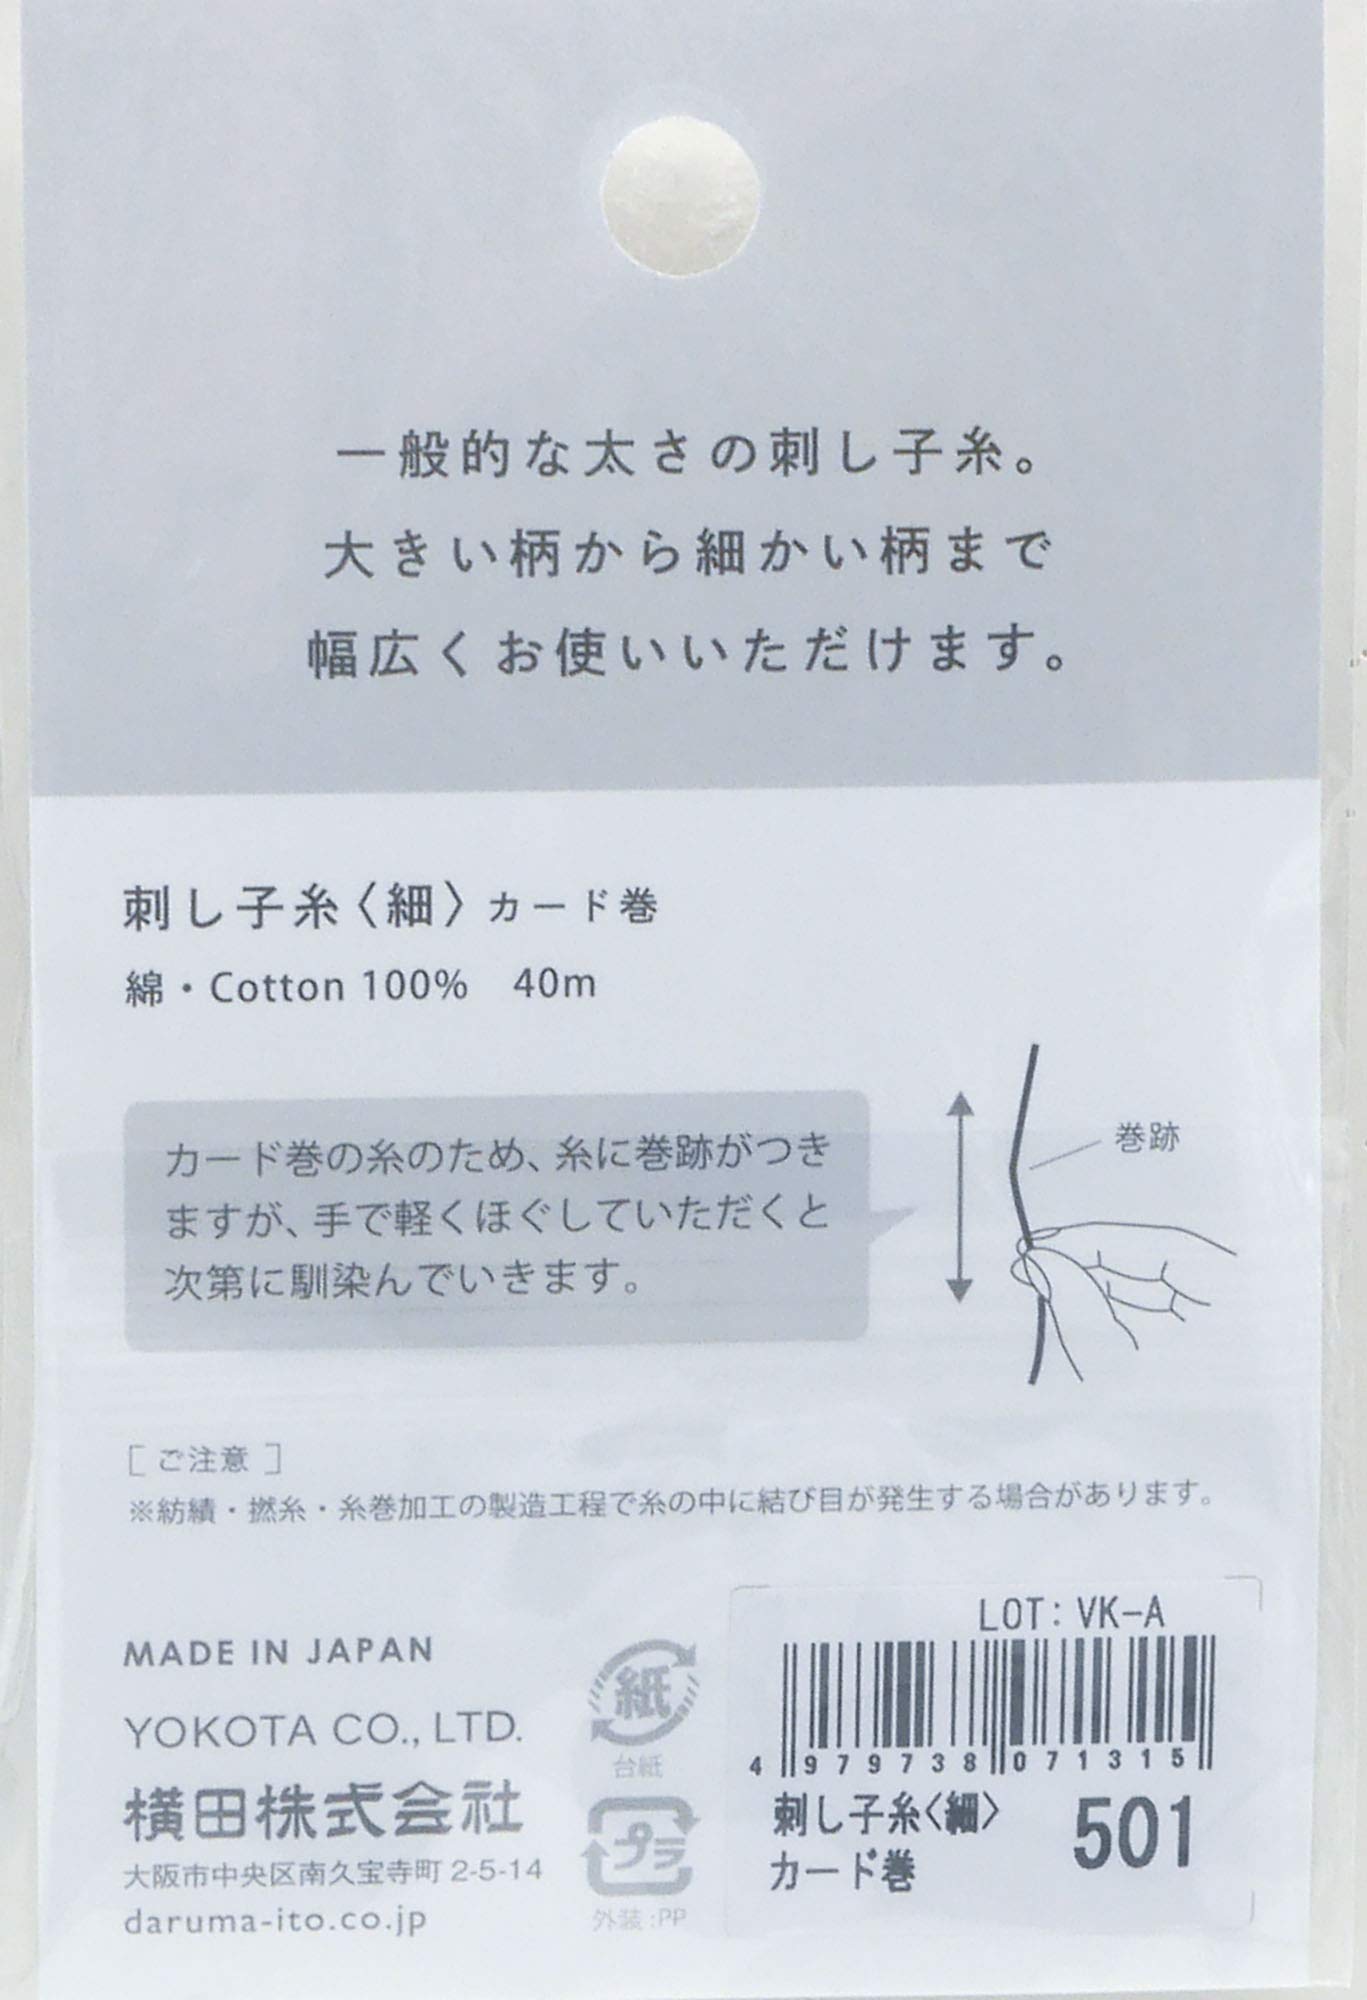 Yokota Daruma Sashiko Thread Single and Variegated Color (Paper Baloon, Thin 40M Card)